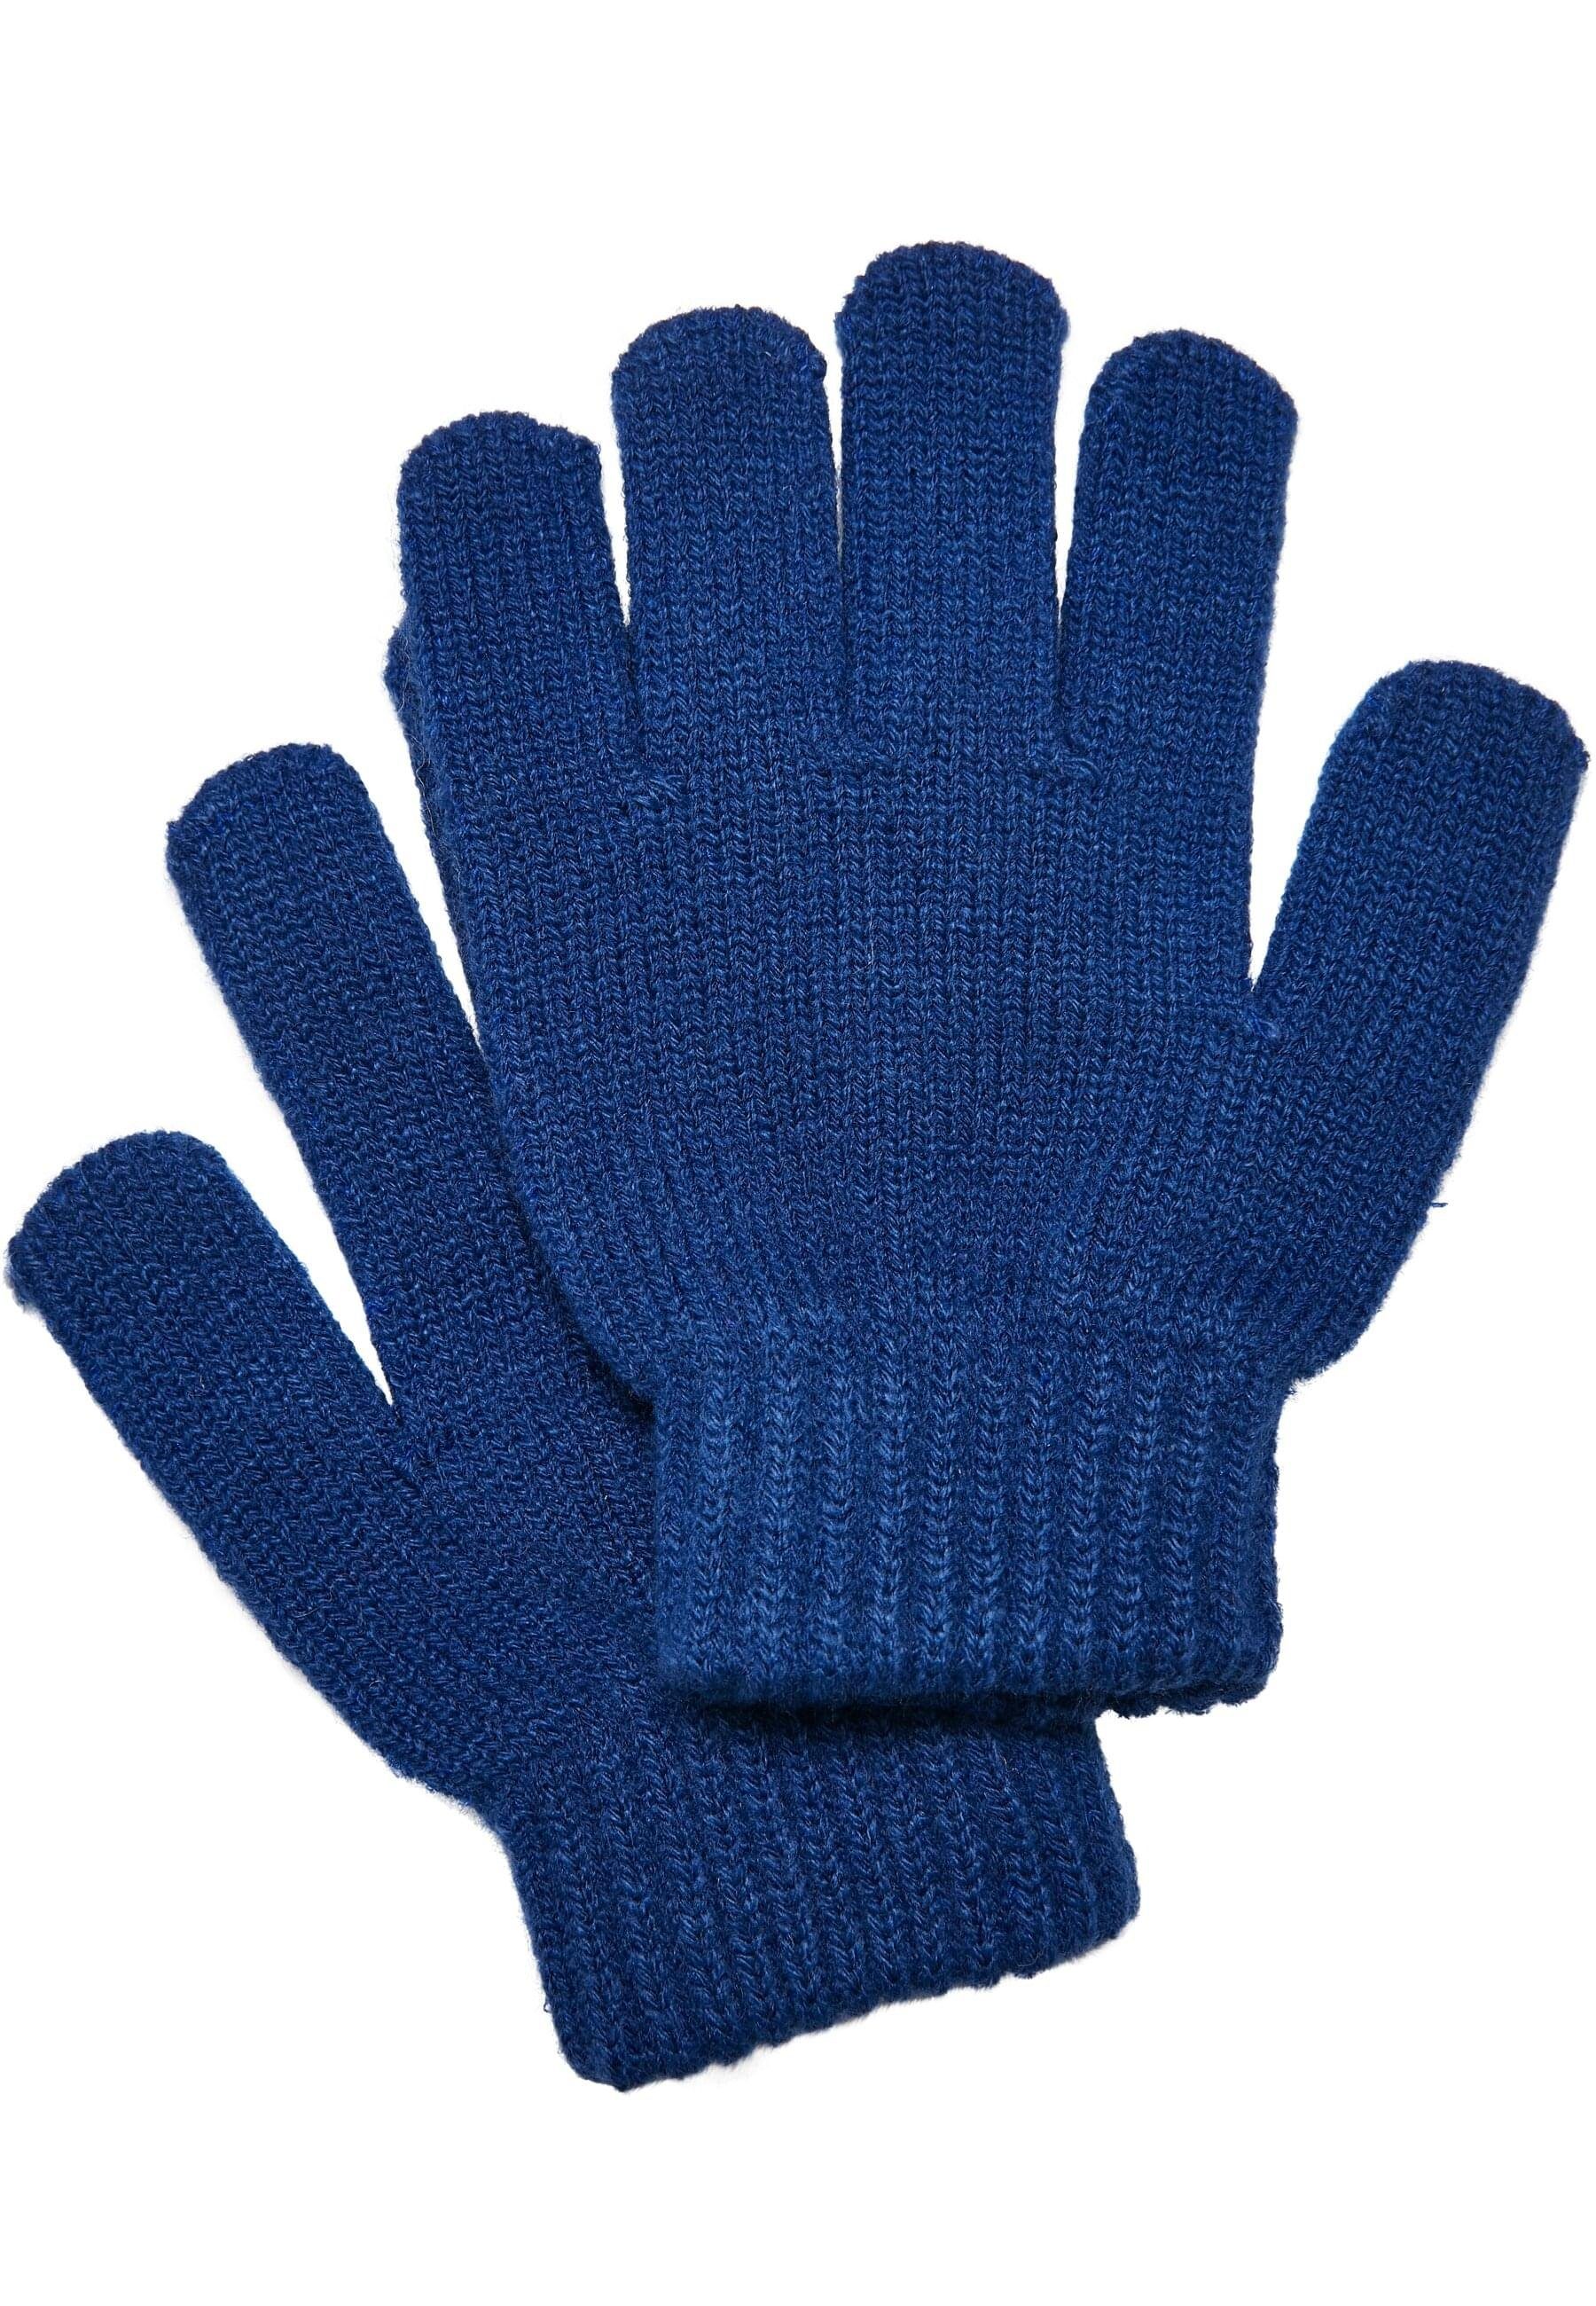 Unisex URBAN Gloves Kids royal Knit Baumwollhandschuhe CLASSICS